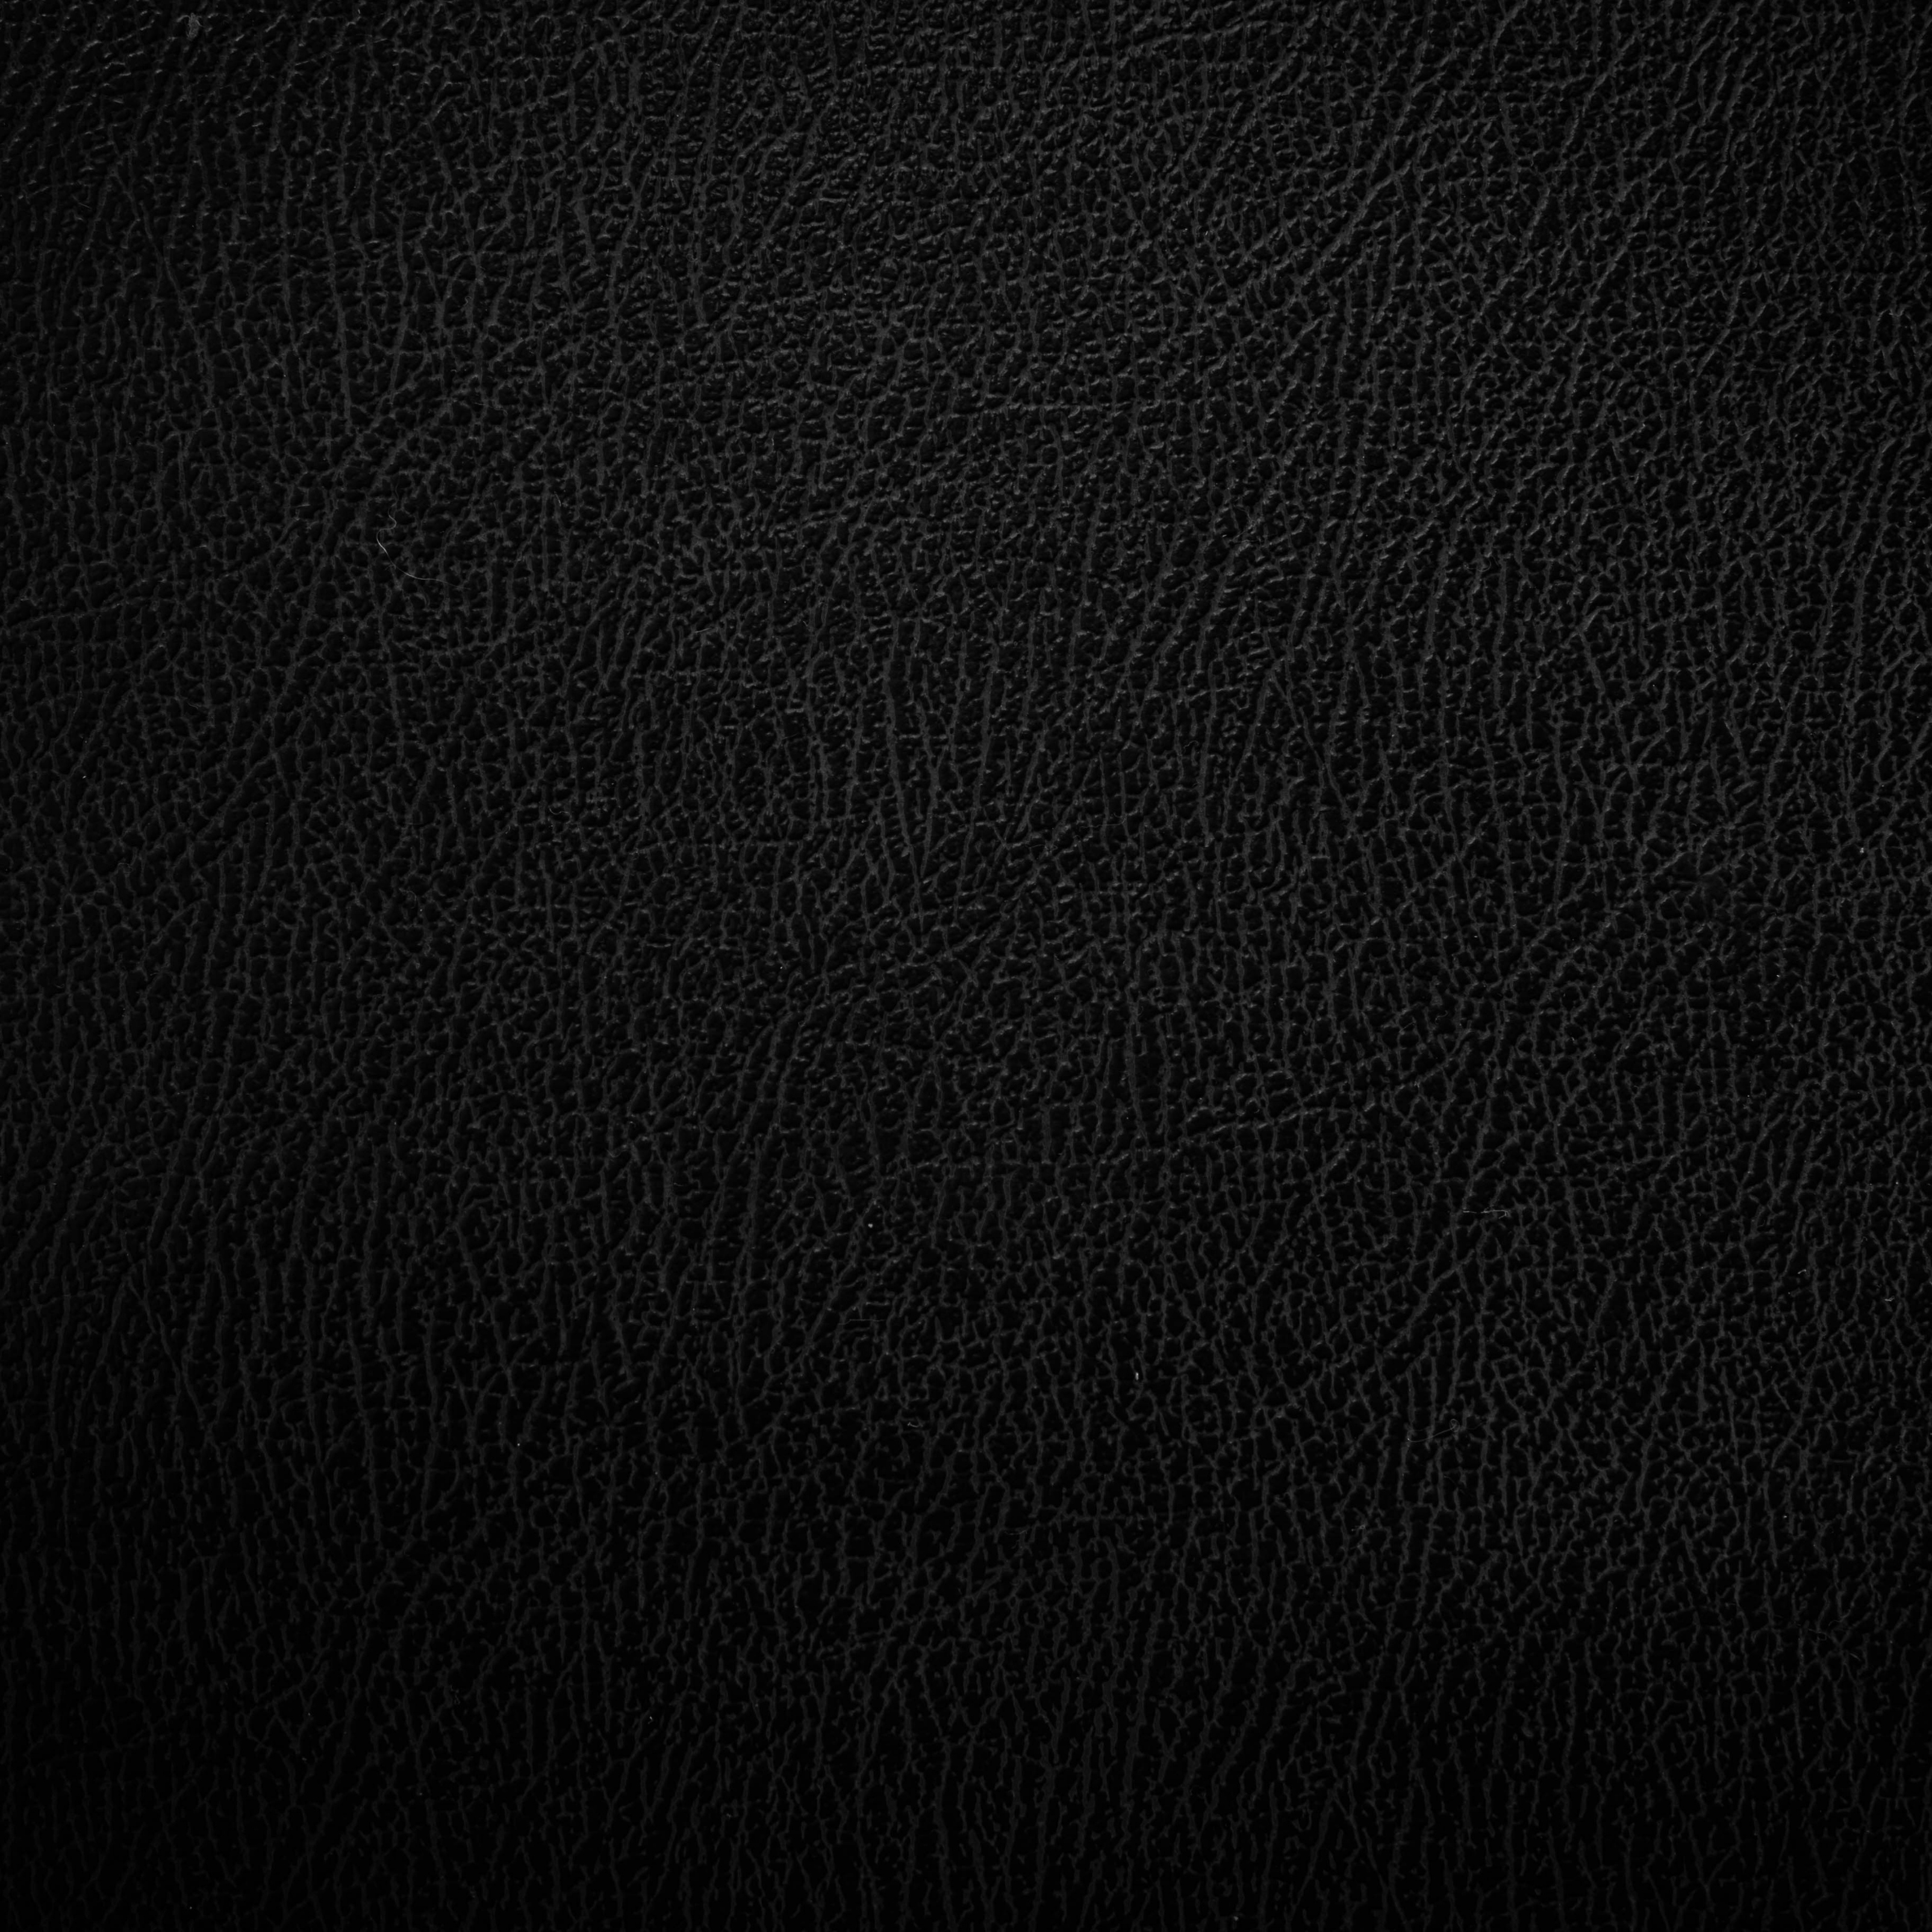 iPad Wallpapers Black Leather Texture iPad Wallpaper 3208x3208 px